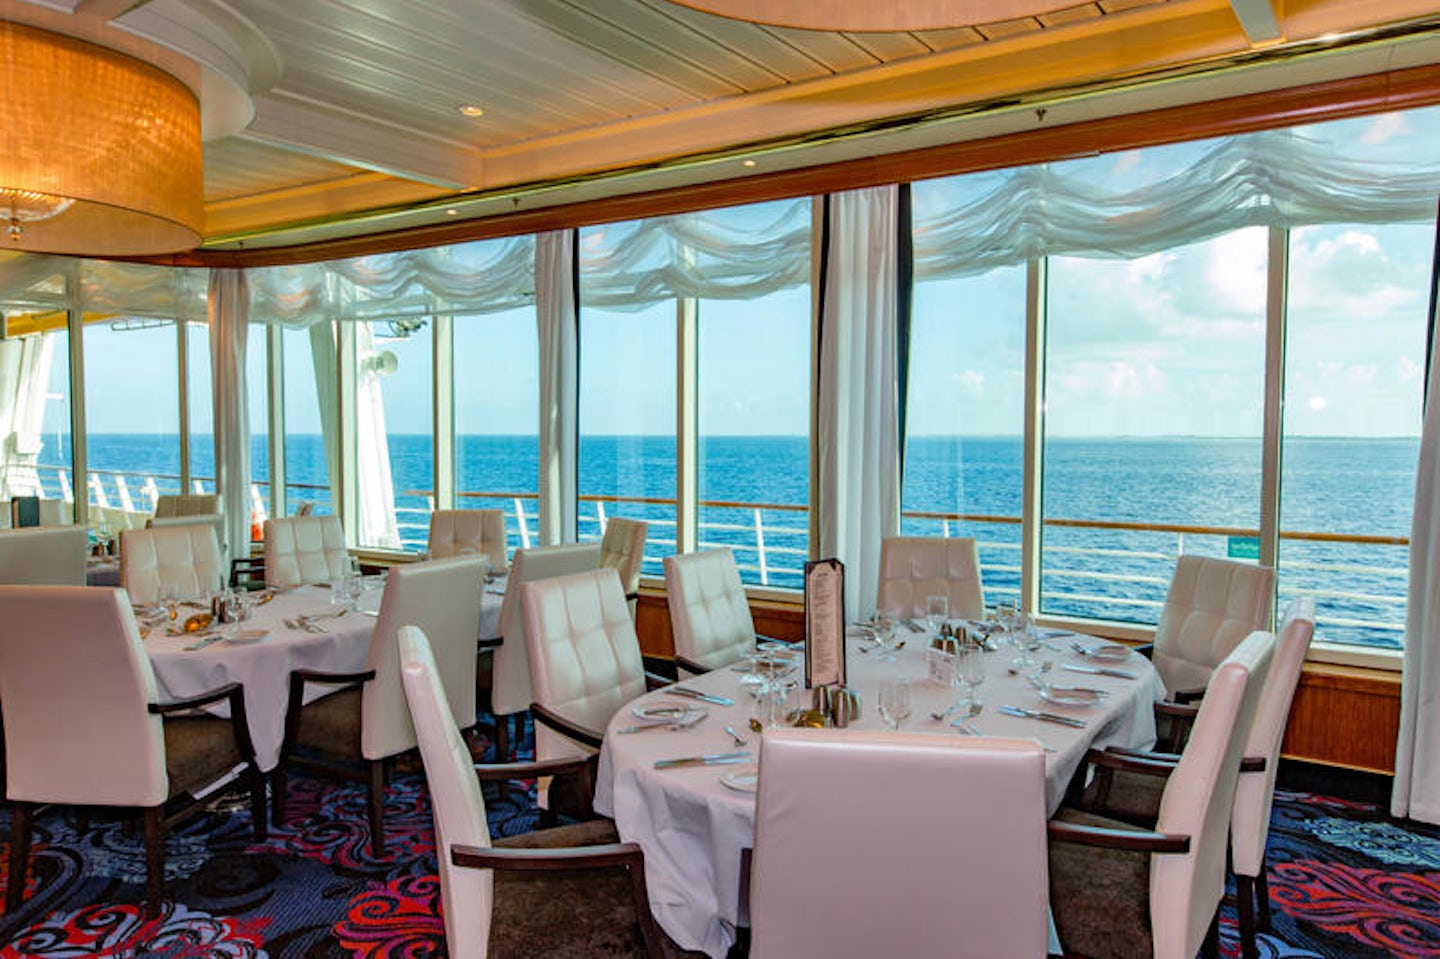 Main Dining Room on Mariner of the Seas